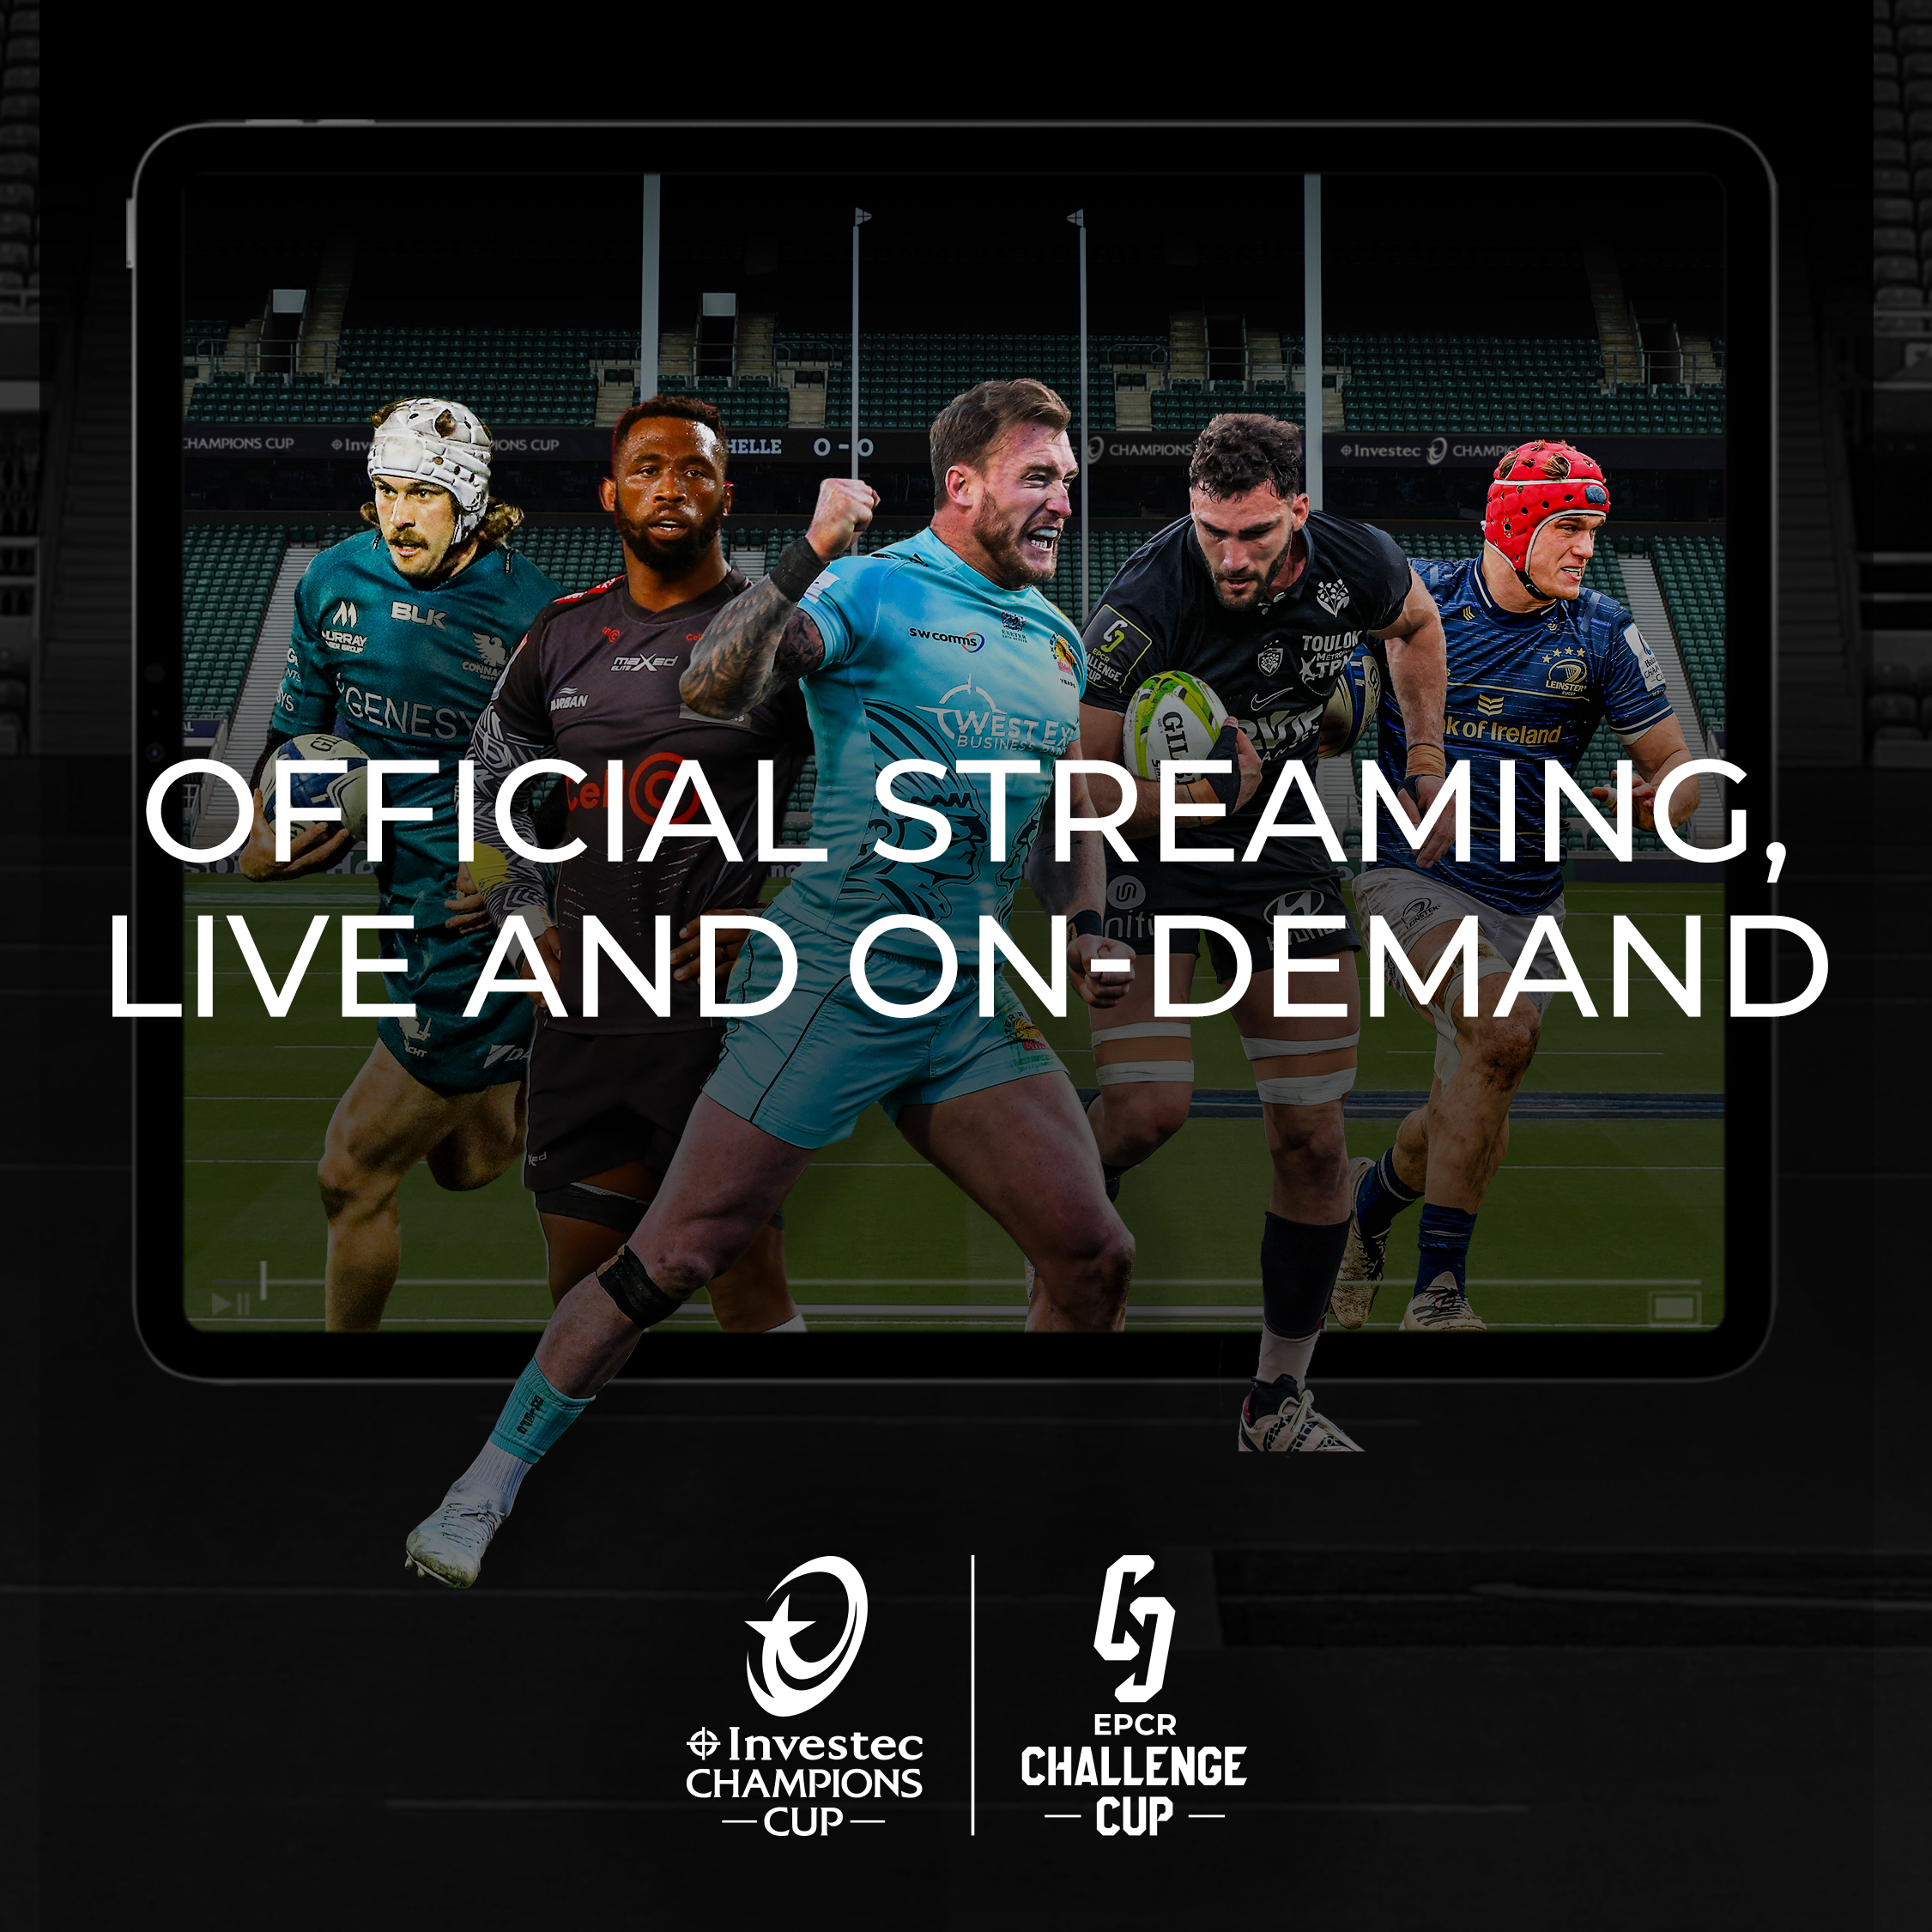 Champions & EPCR Challenge | Live streaming